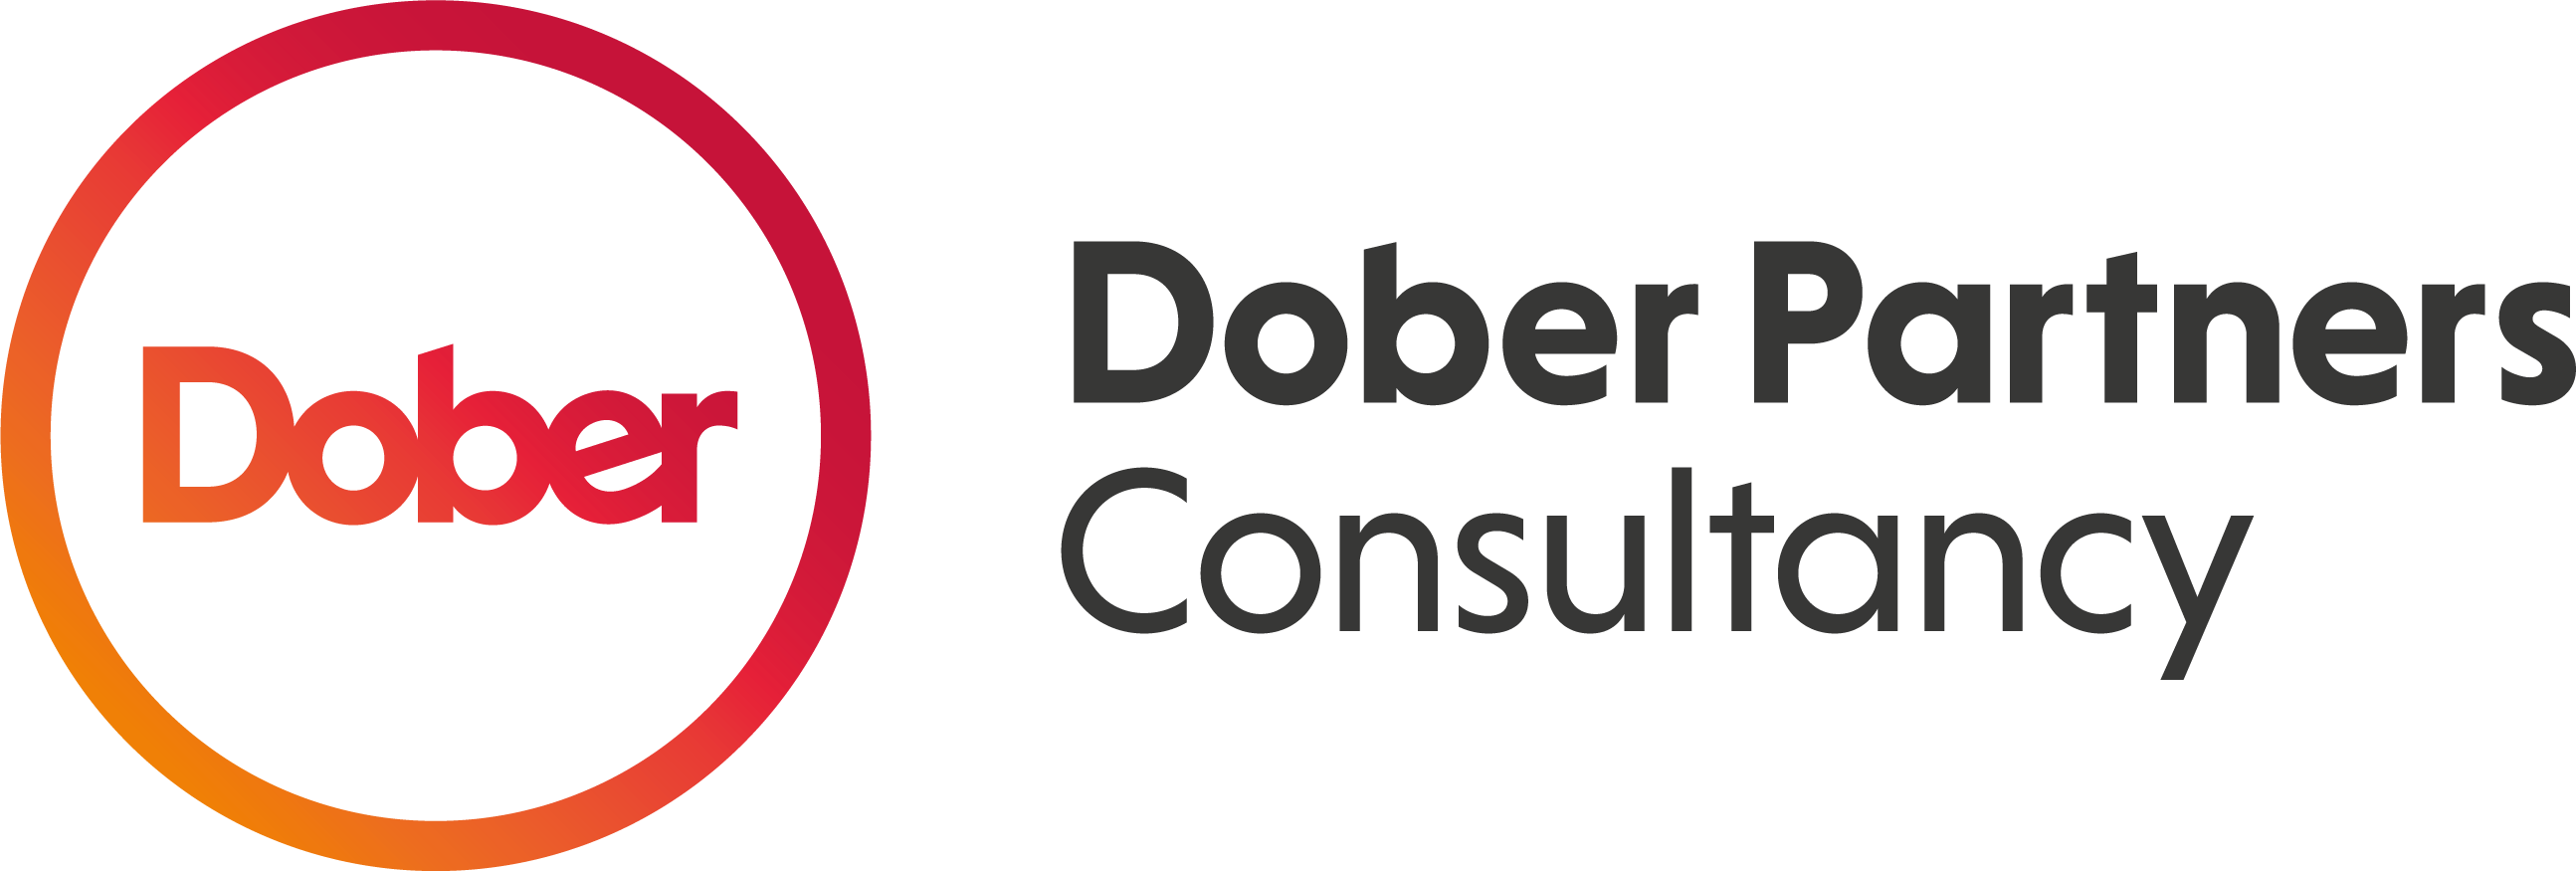 Dober Partners Consultancy